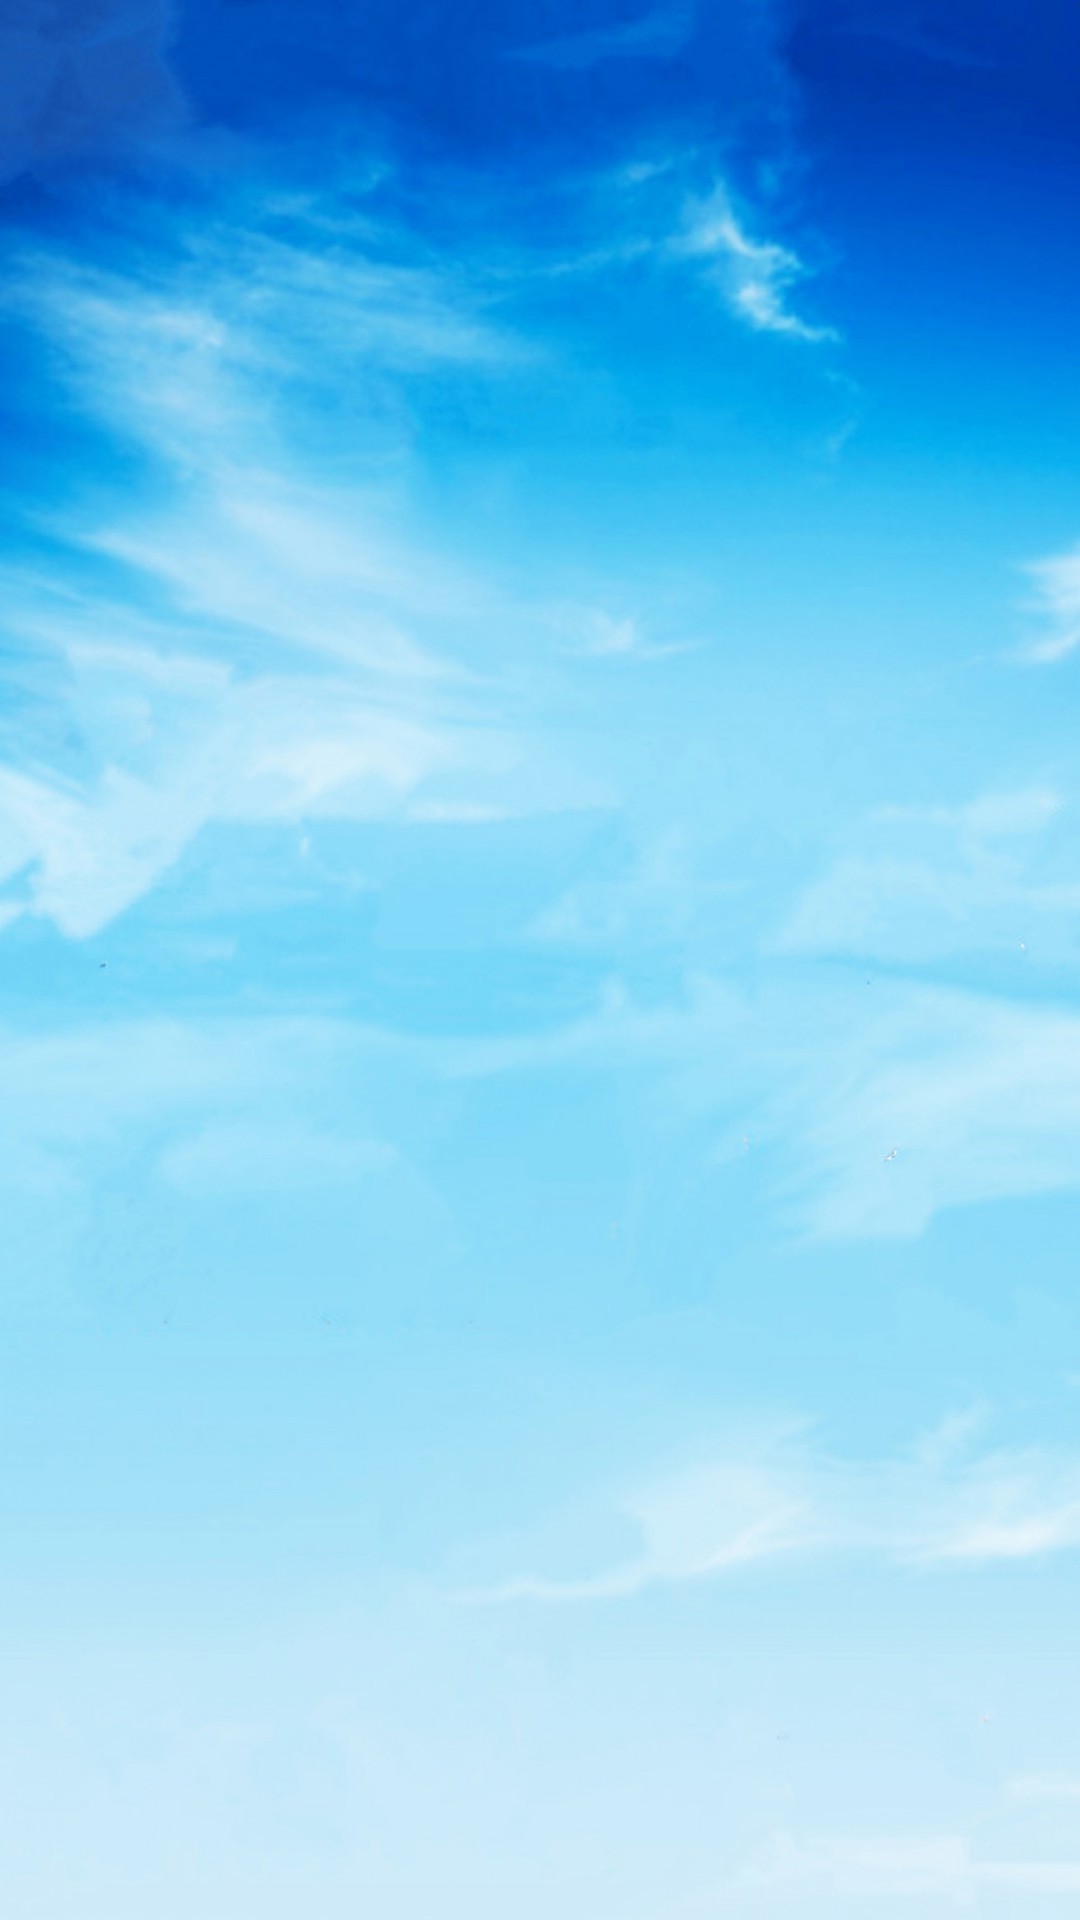 bright iphone wallpaper,sky,blue,daytime,cloud,aqua